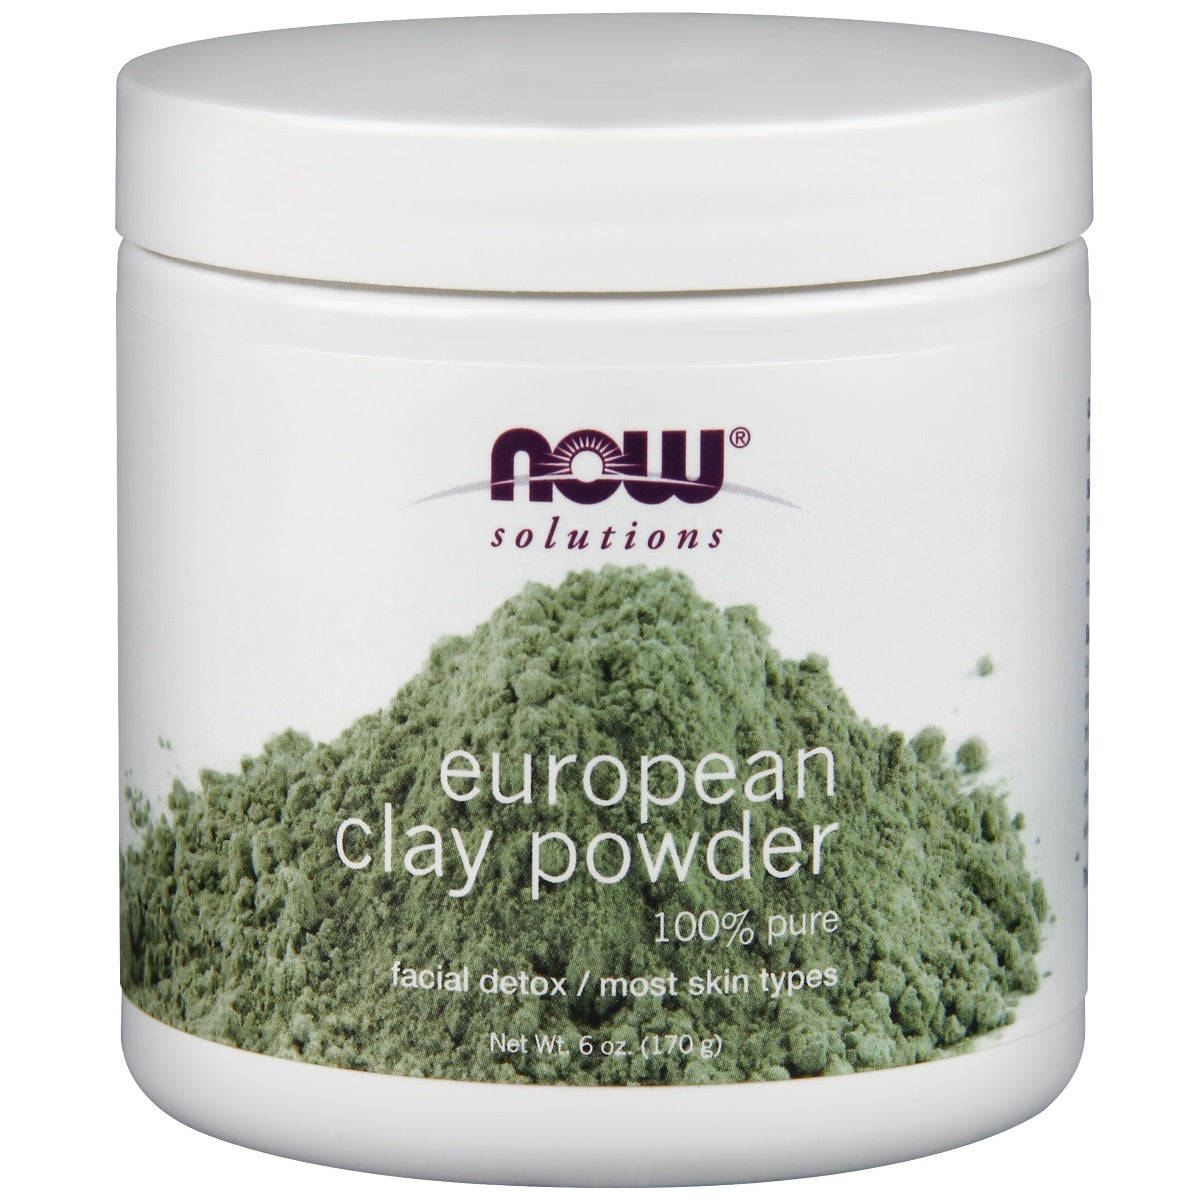 Primary image of European Clay Powder